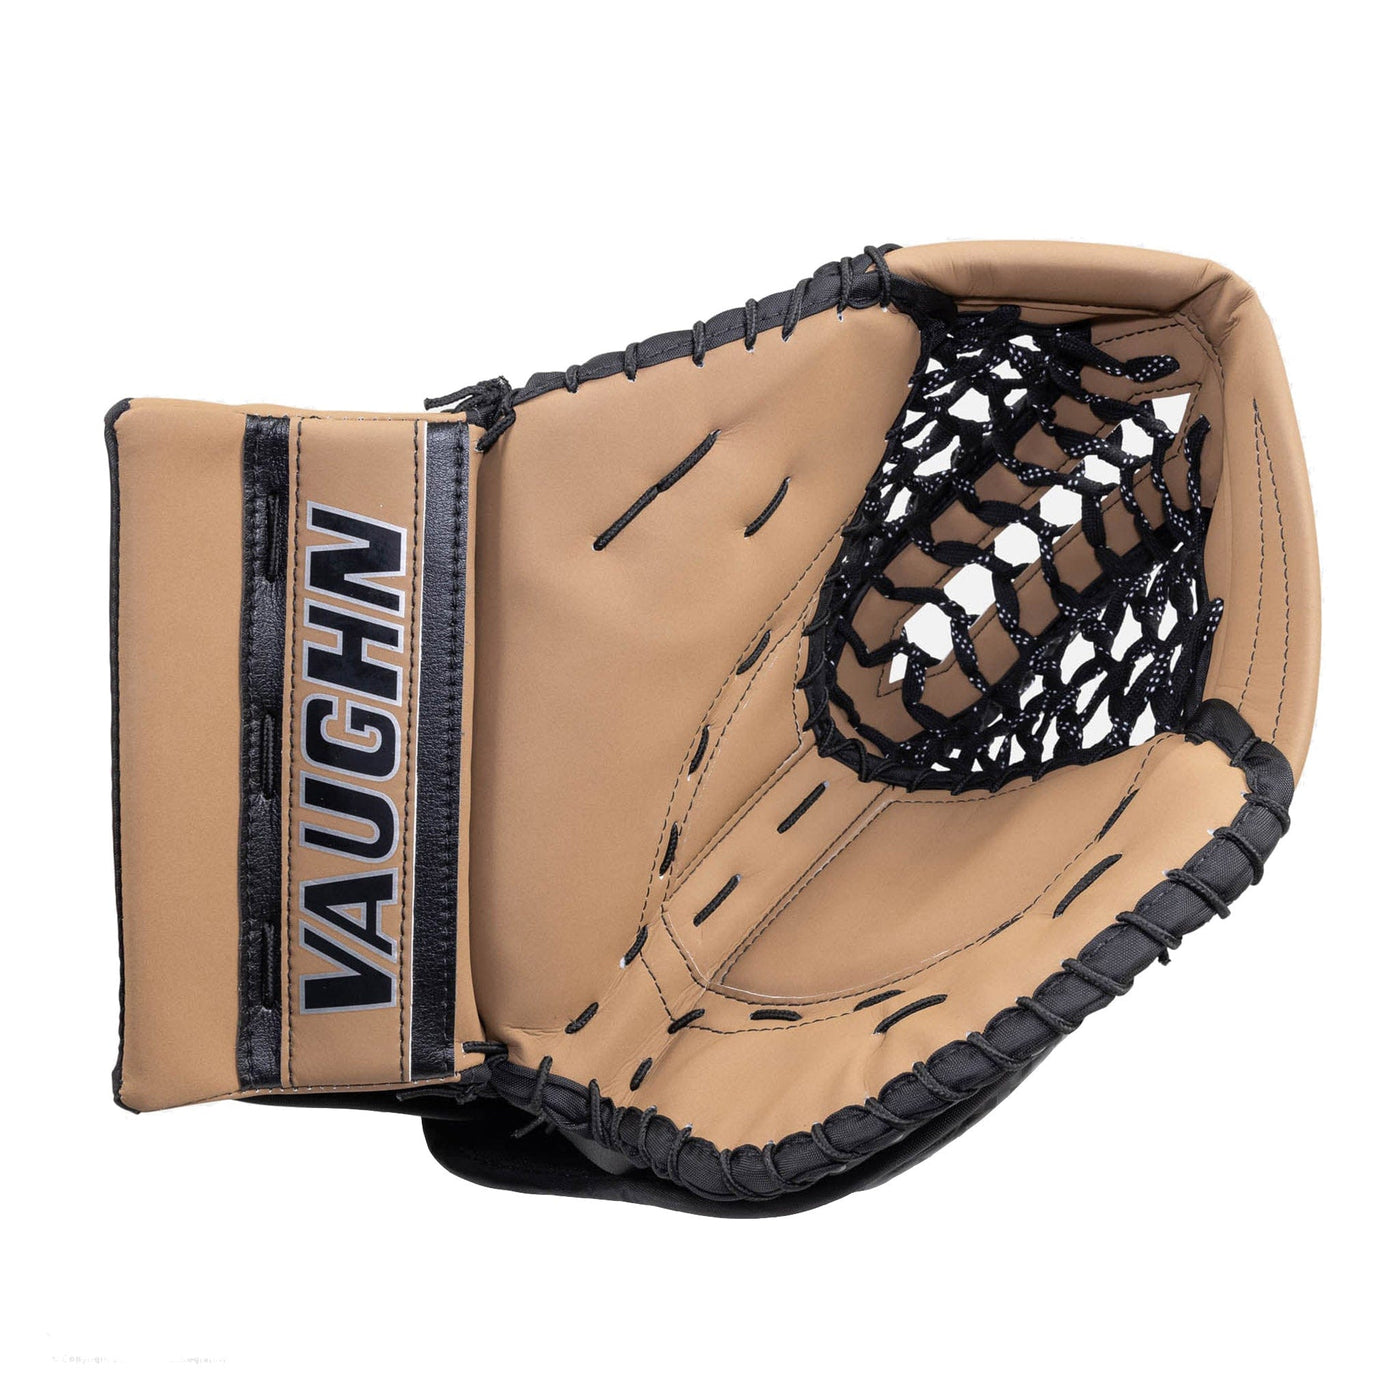 Vaughn Velocity V9 Pro Carbon Senior Goalie Catcher - Vintage Graphic